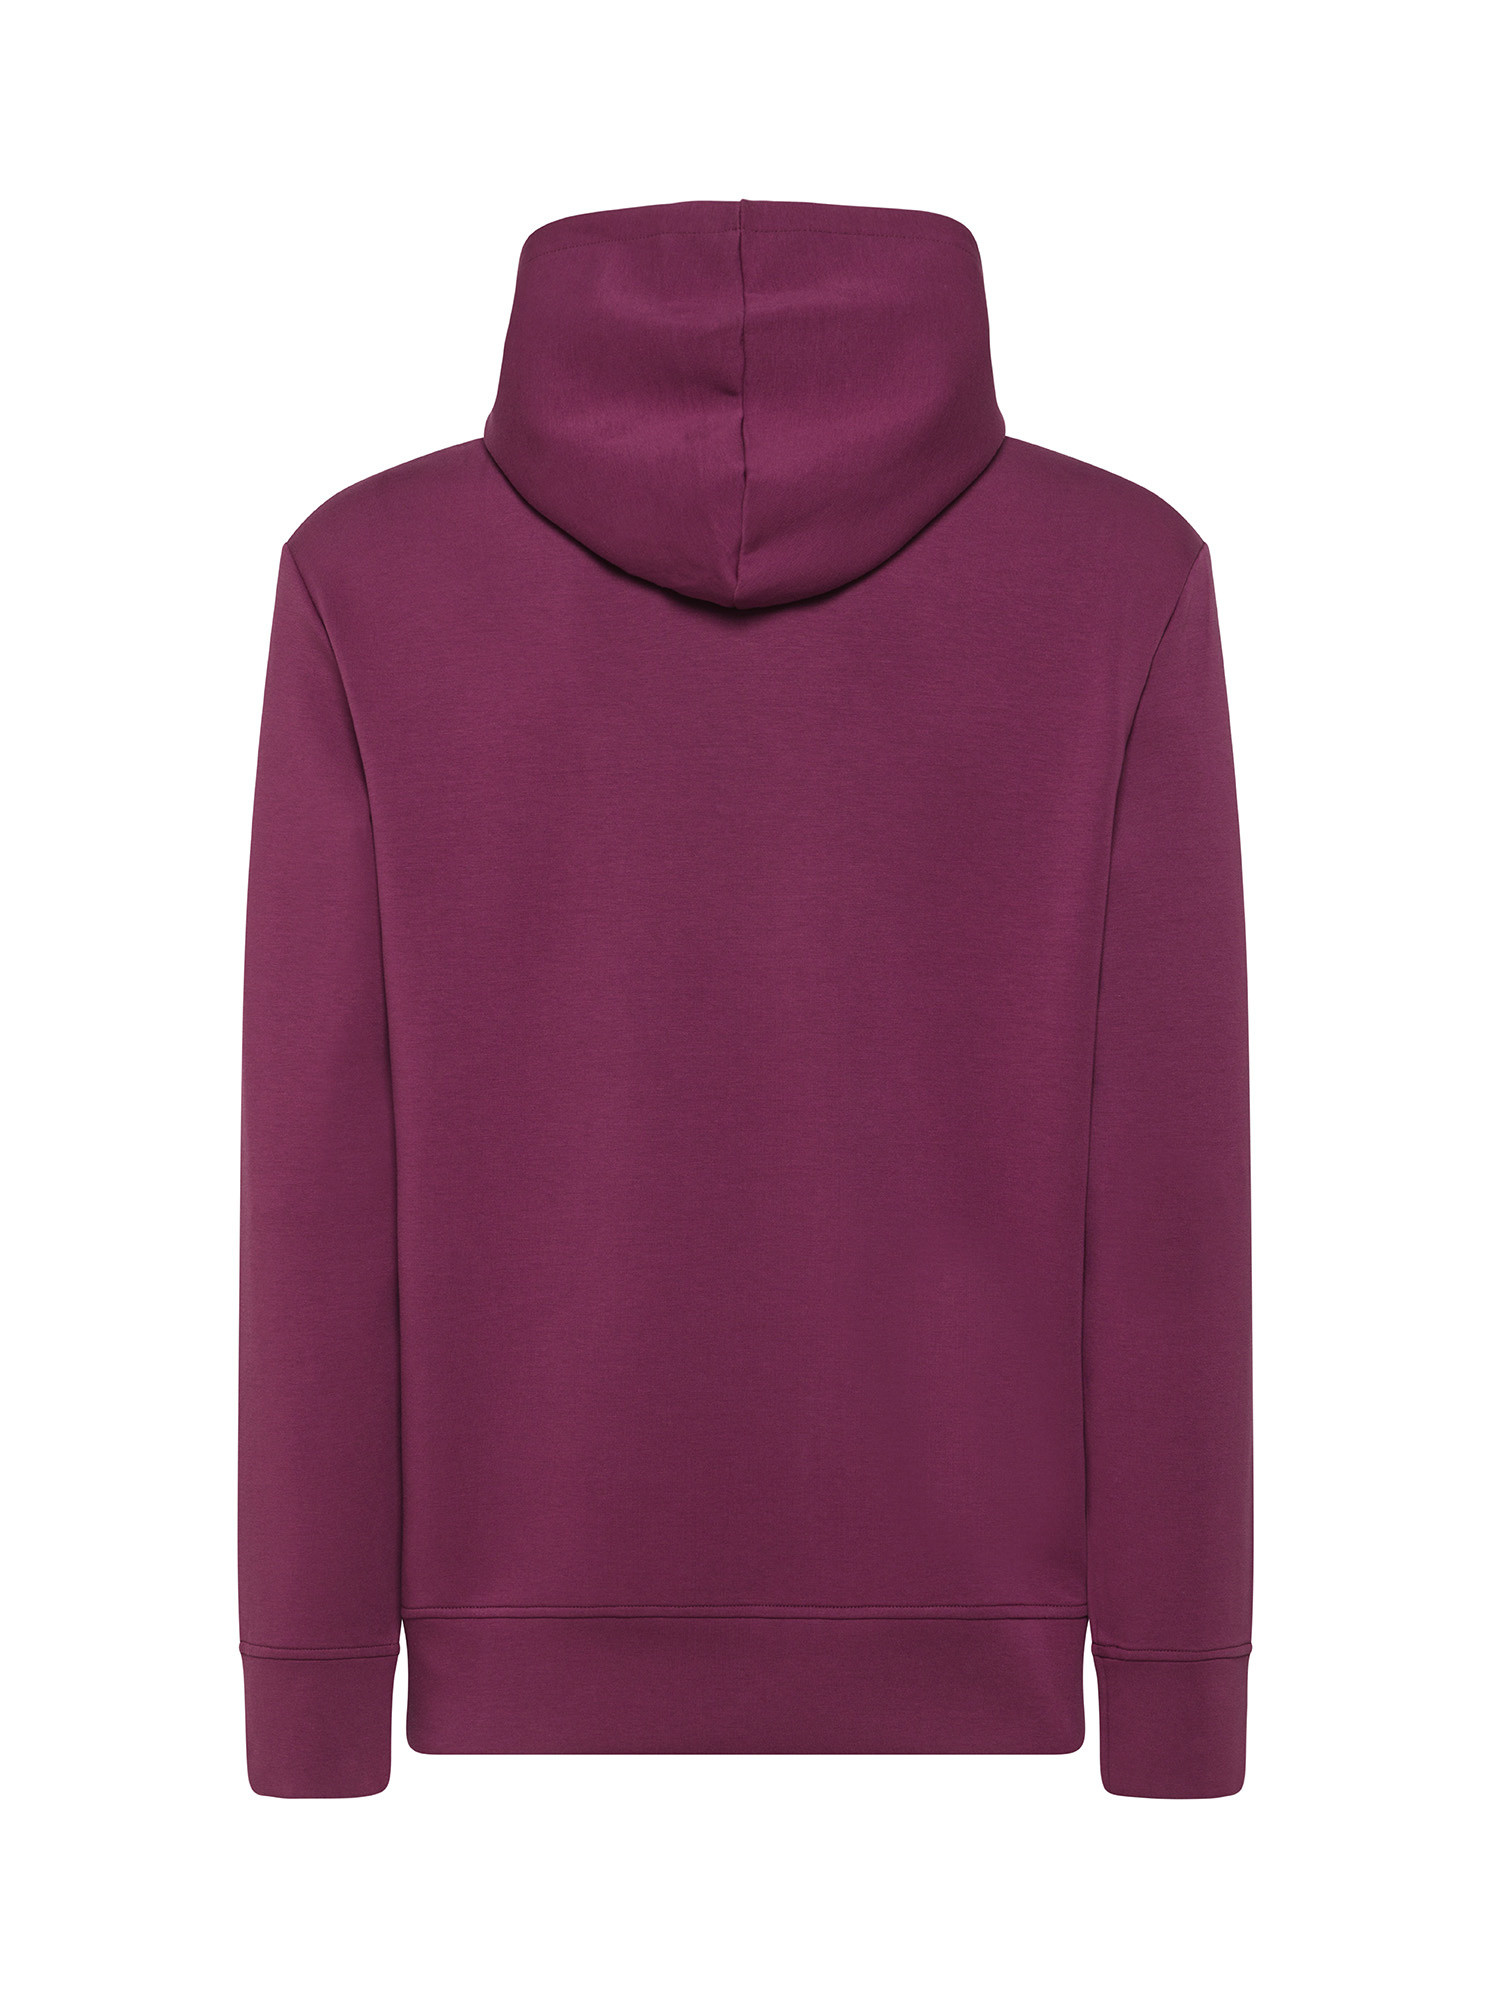 Armani Exchange - Sweatshirt with hood and logo, Red Bordeaux, large image number 1